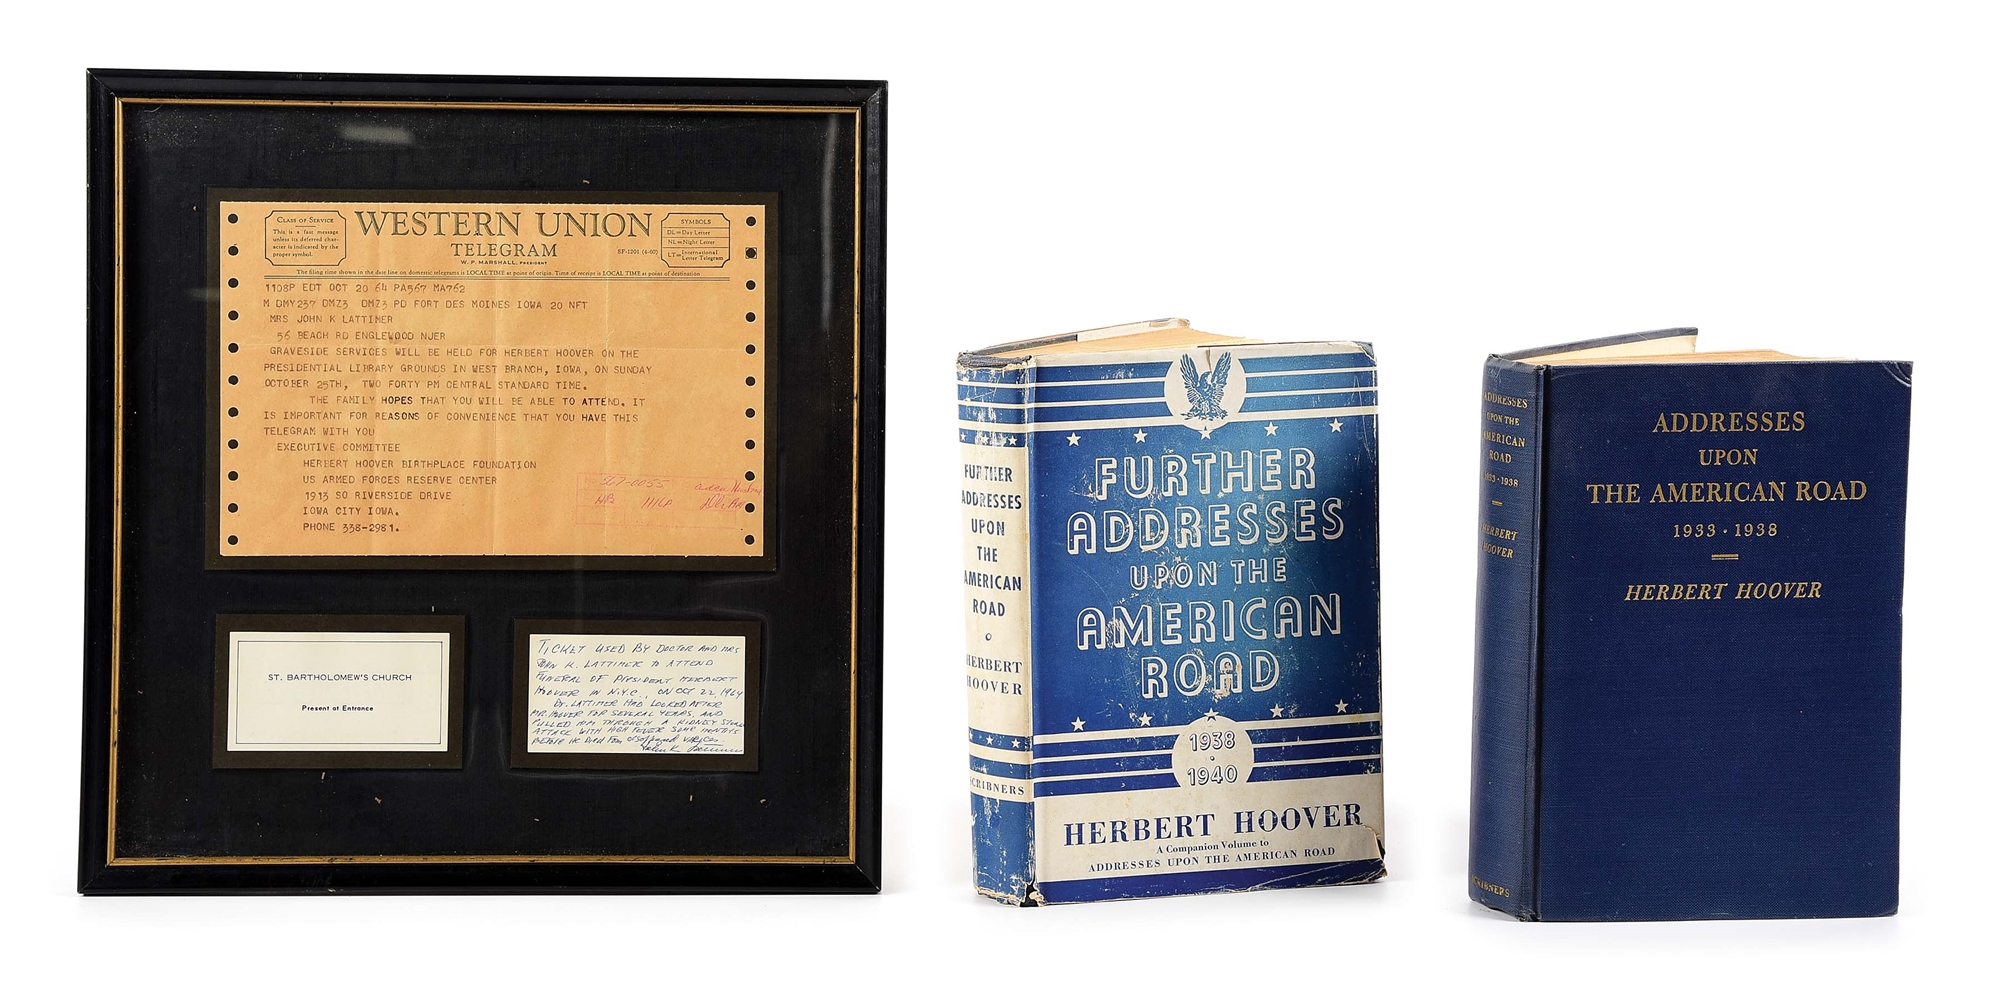 LOT OF 3: HERBERT HOOVER SIGNED BOOKS AND FRAMED TELEGRAM REGARDING HIS DEATH IN 1964.